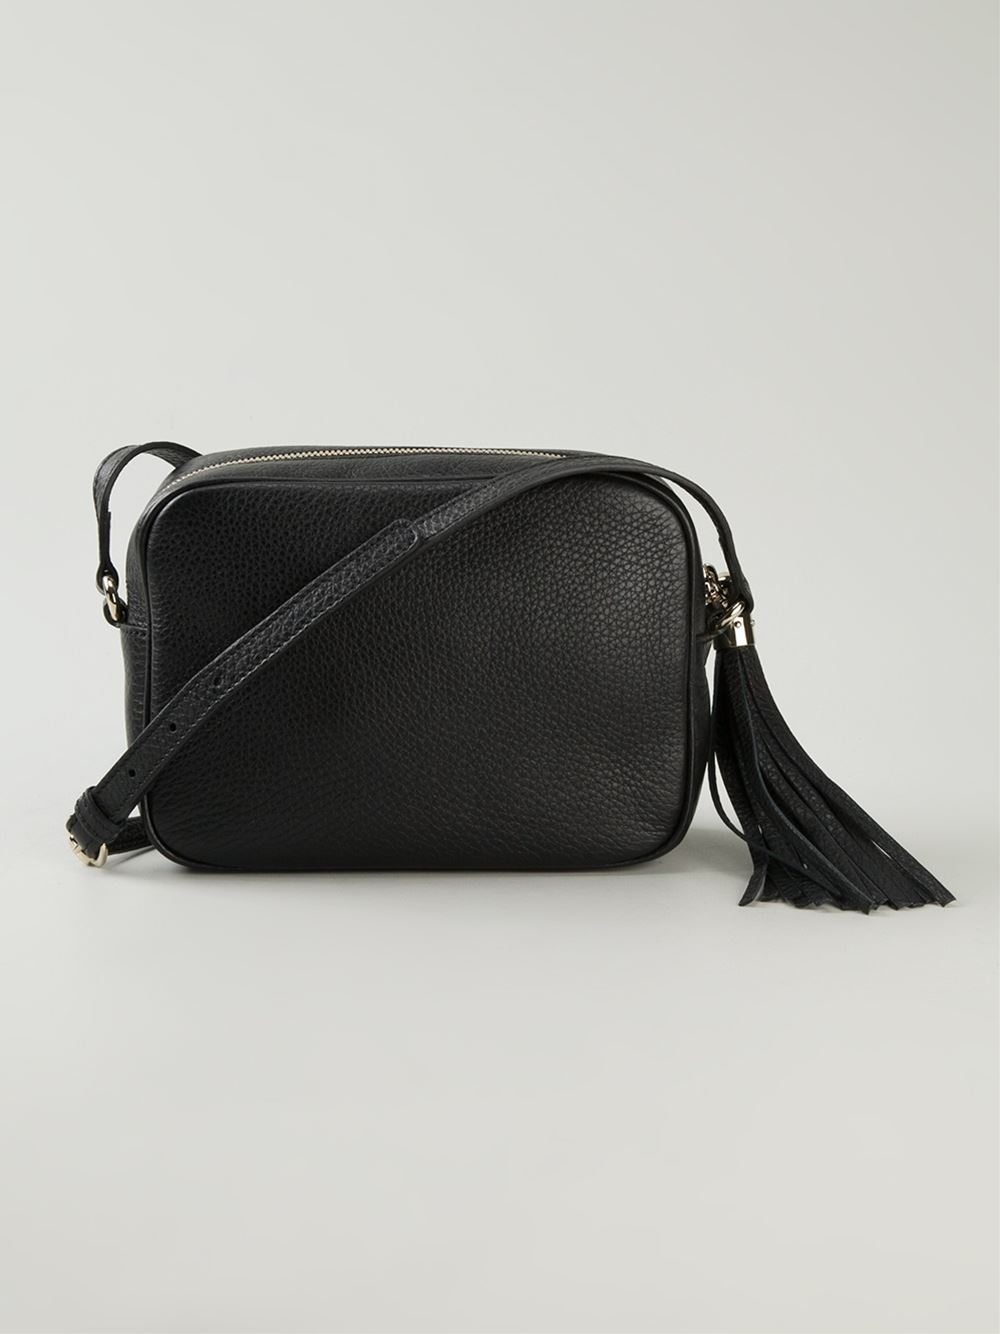 Lyst - Gucci Soho Leather Cross-body Bag in Black